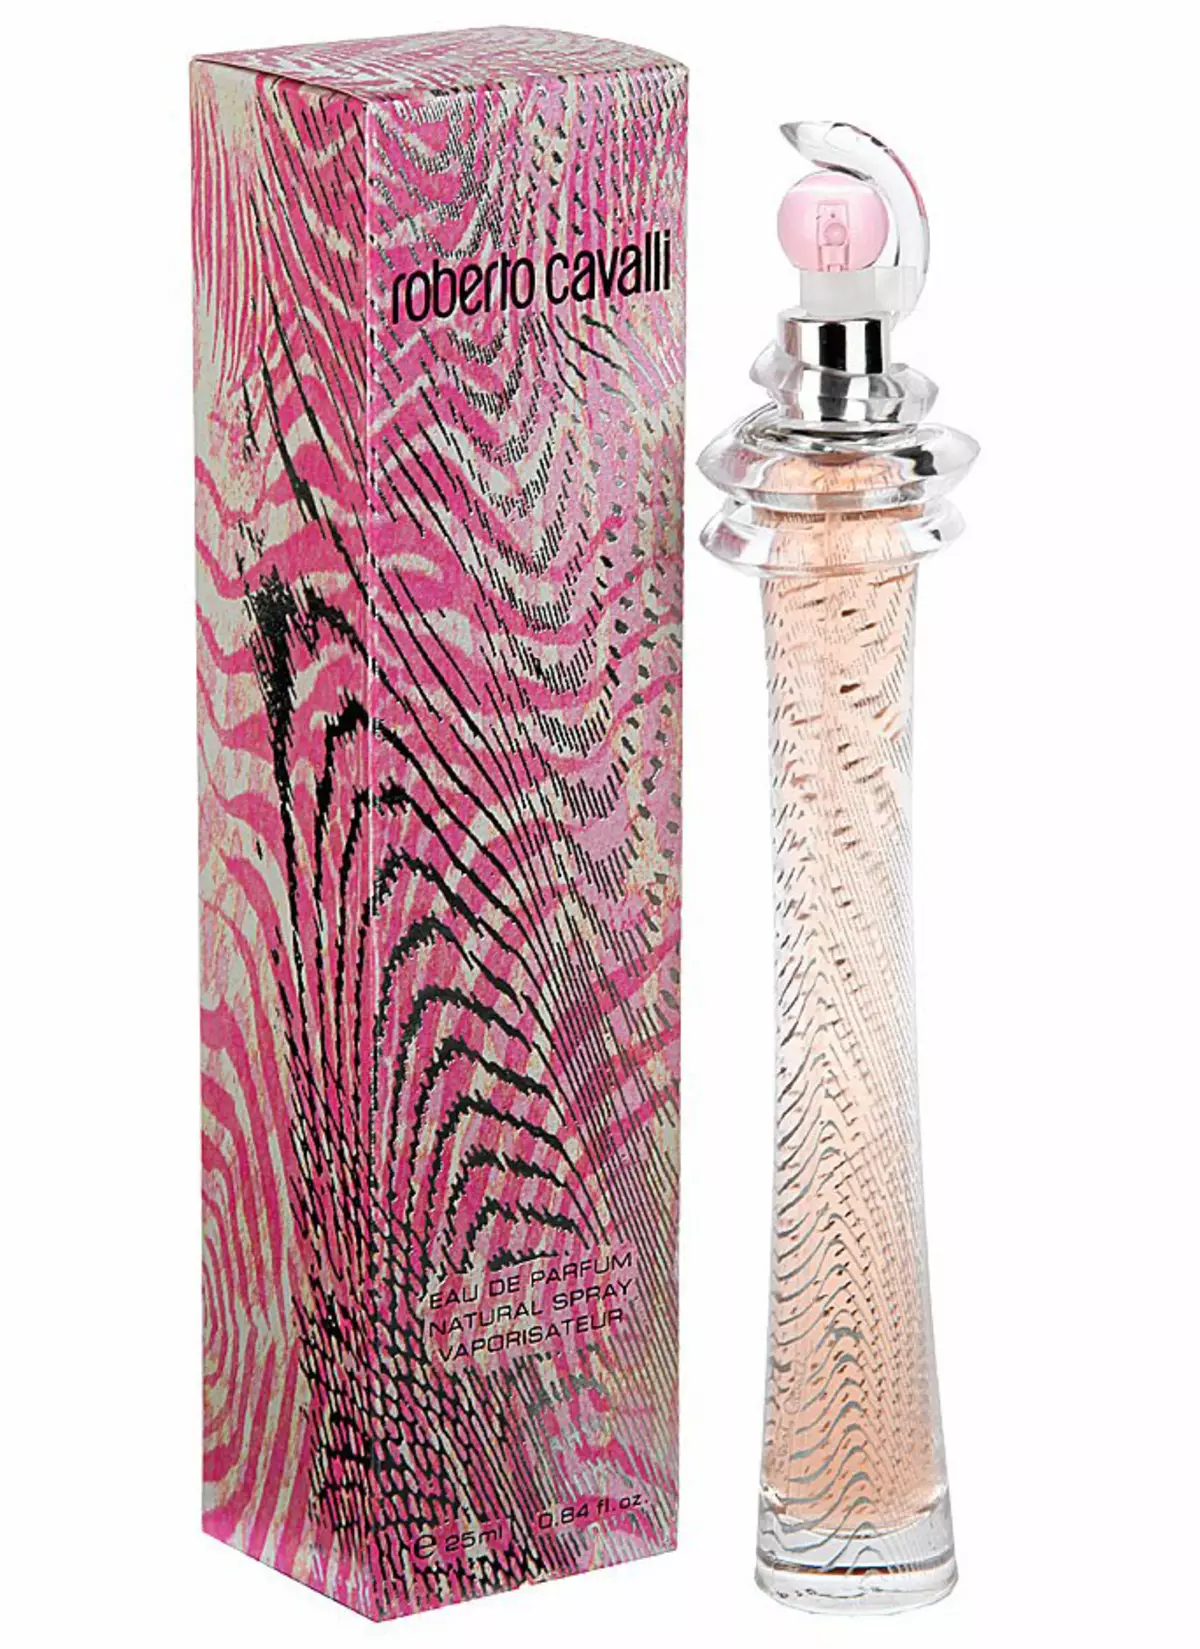 Perfume Roberto Cavalli: Perfume wanita, hanya Cavalli dan air tandas lain, Aromas Roberto Cavalli Eau de Parfum, Paradiso dan Acqua 25296_2